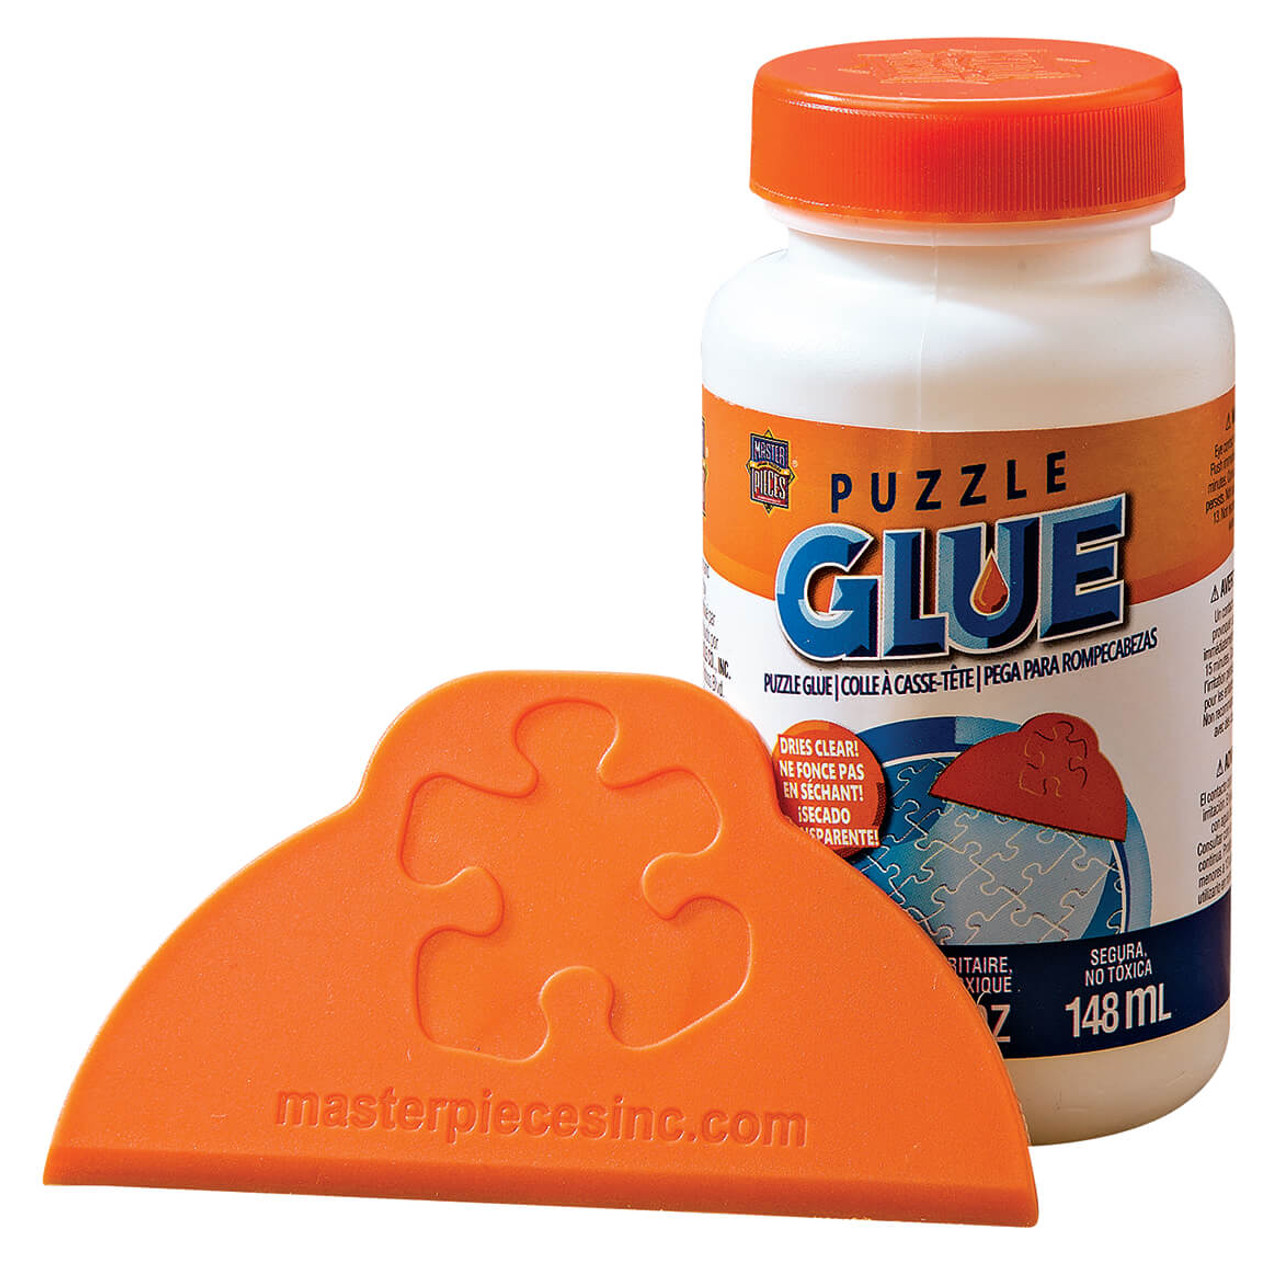 Puzzle Glue - 5oz Bottle & Wide Plastic Spreader